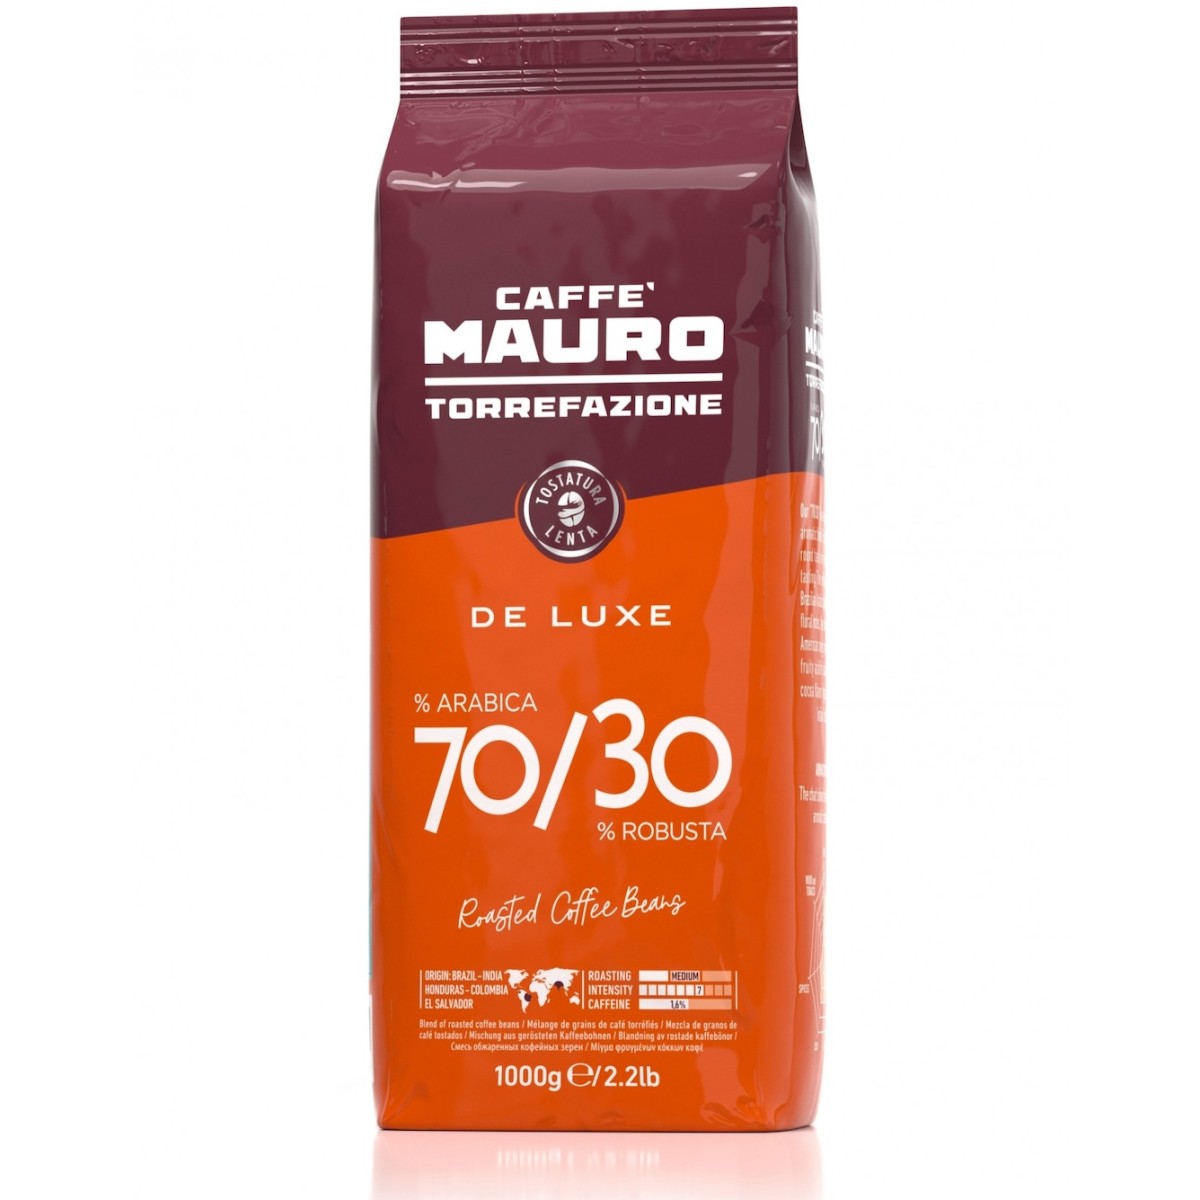 MAURO DE LUXE coffee beans - 1kg